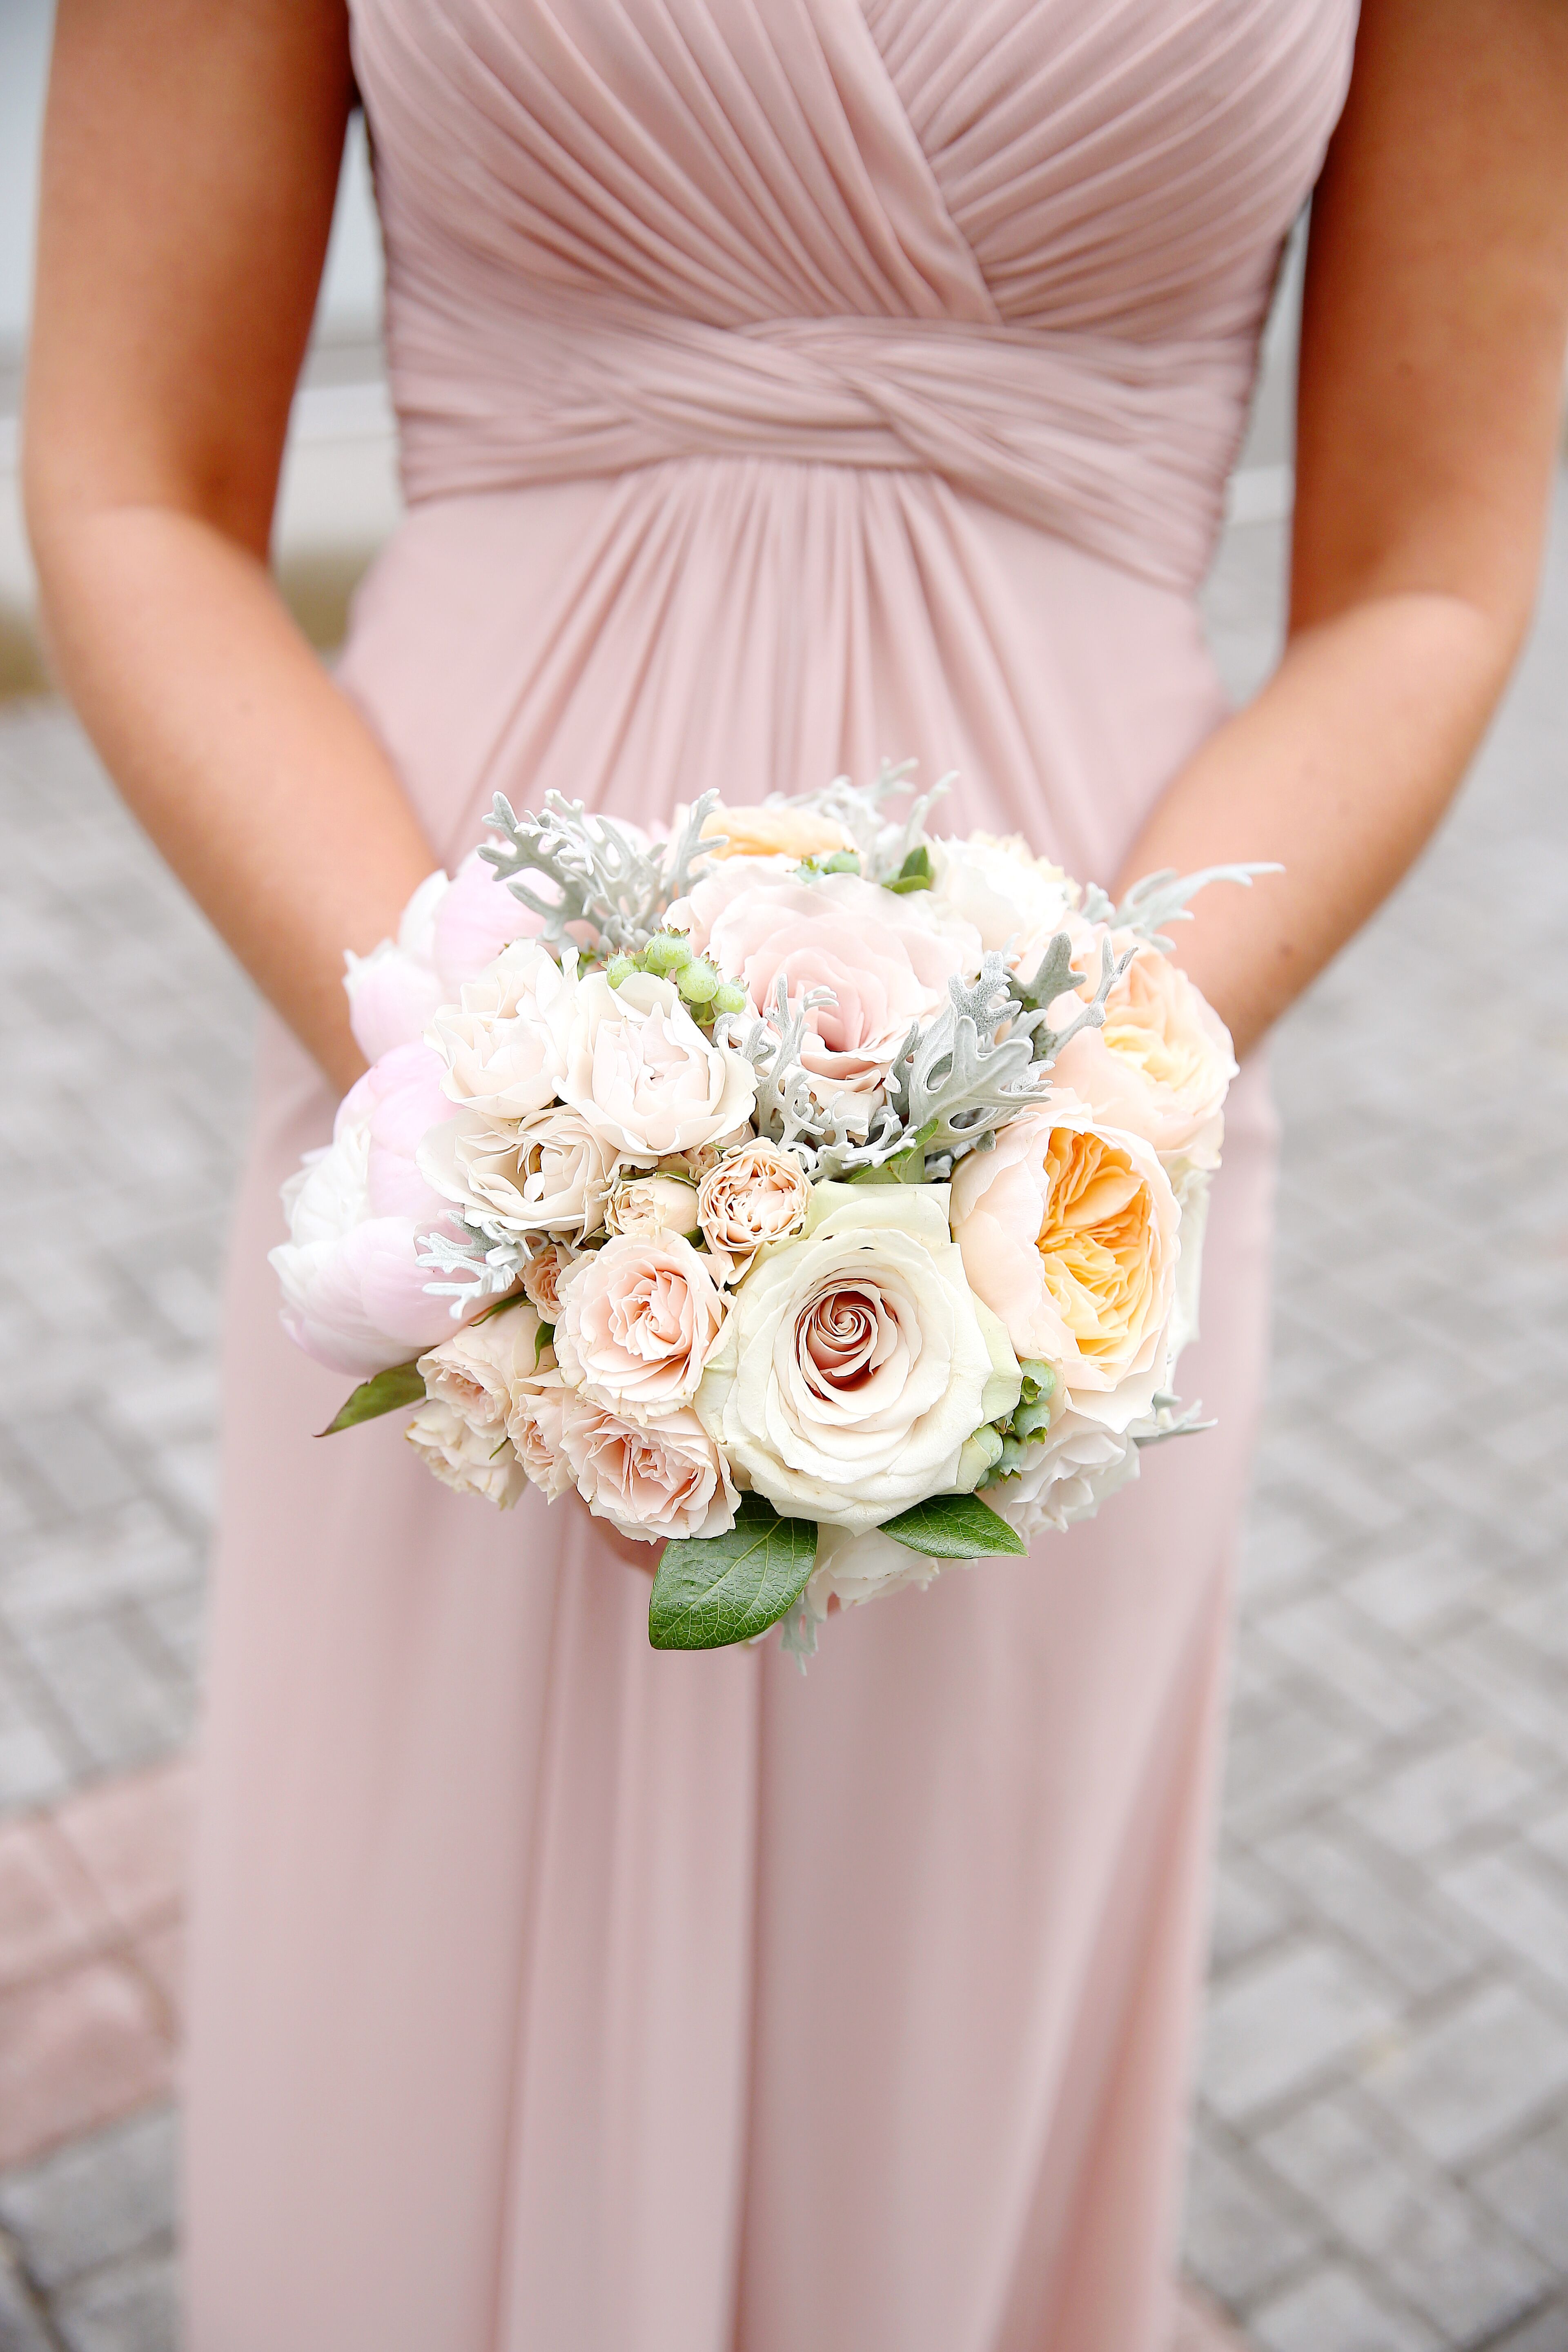 Blush Bridesmaid Dress And Bouquet 9006